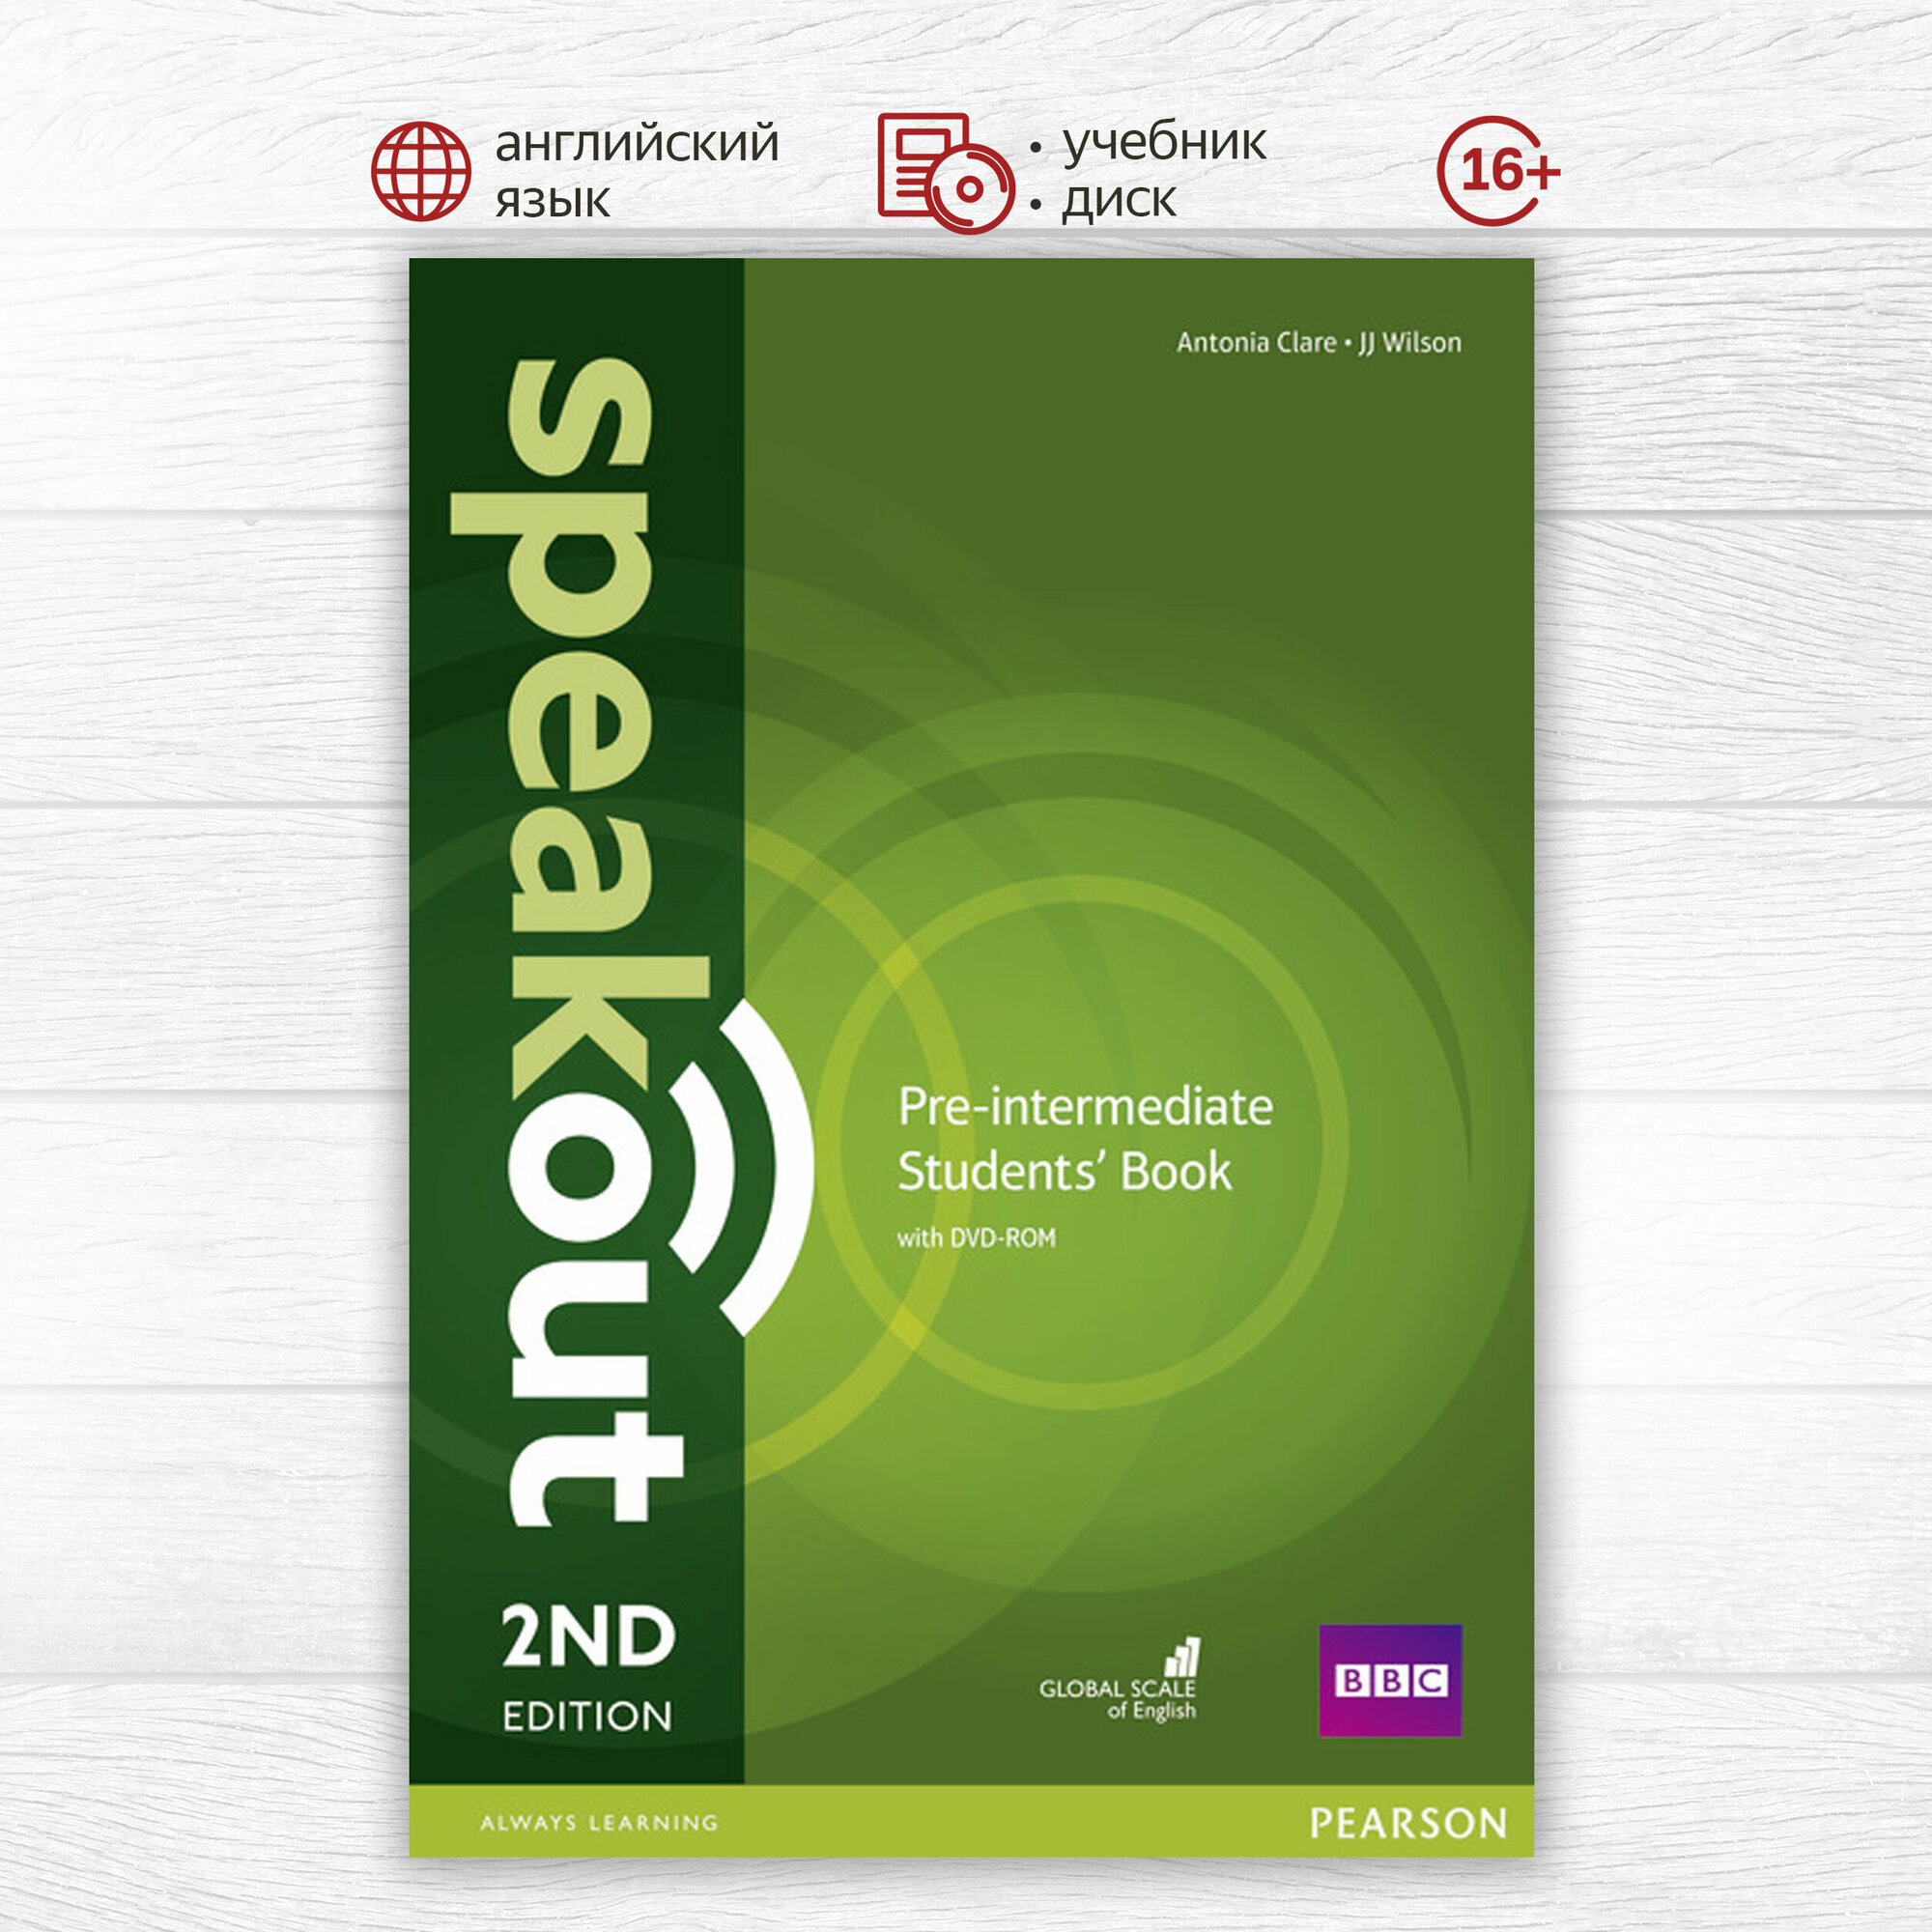 Speakout Second Edition Pre-Intermediate Student's Book and DVD-ROM, учебник по английскому языку для студентов и взрослых